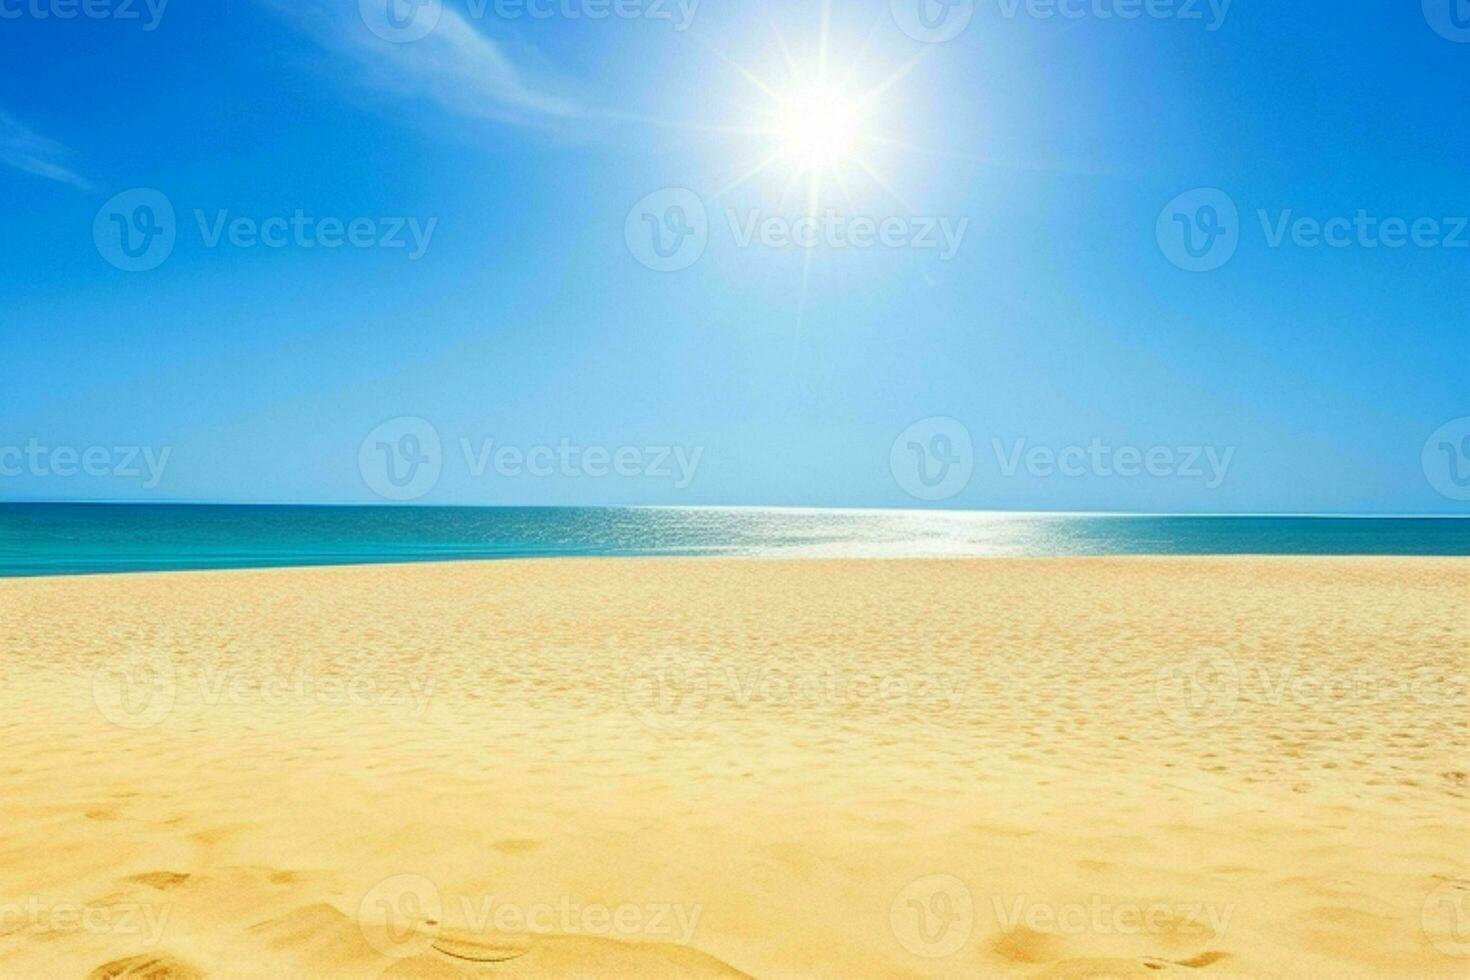 ai gegenereerd lucht en zand van de strand. pro foto